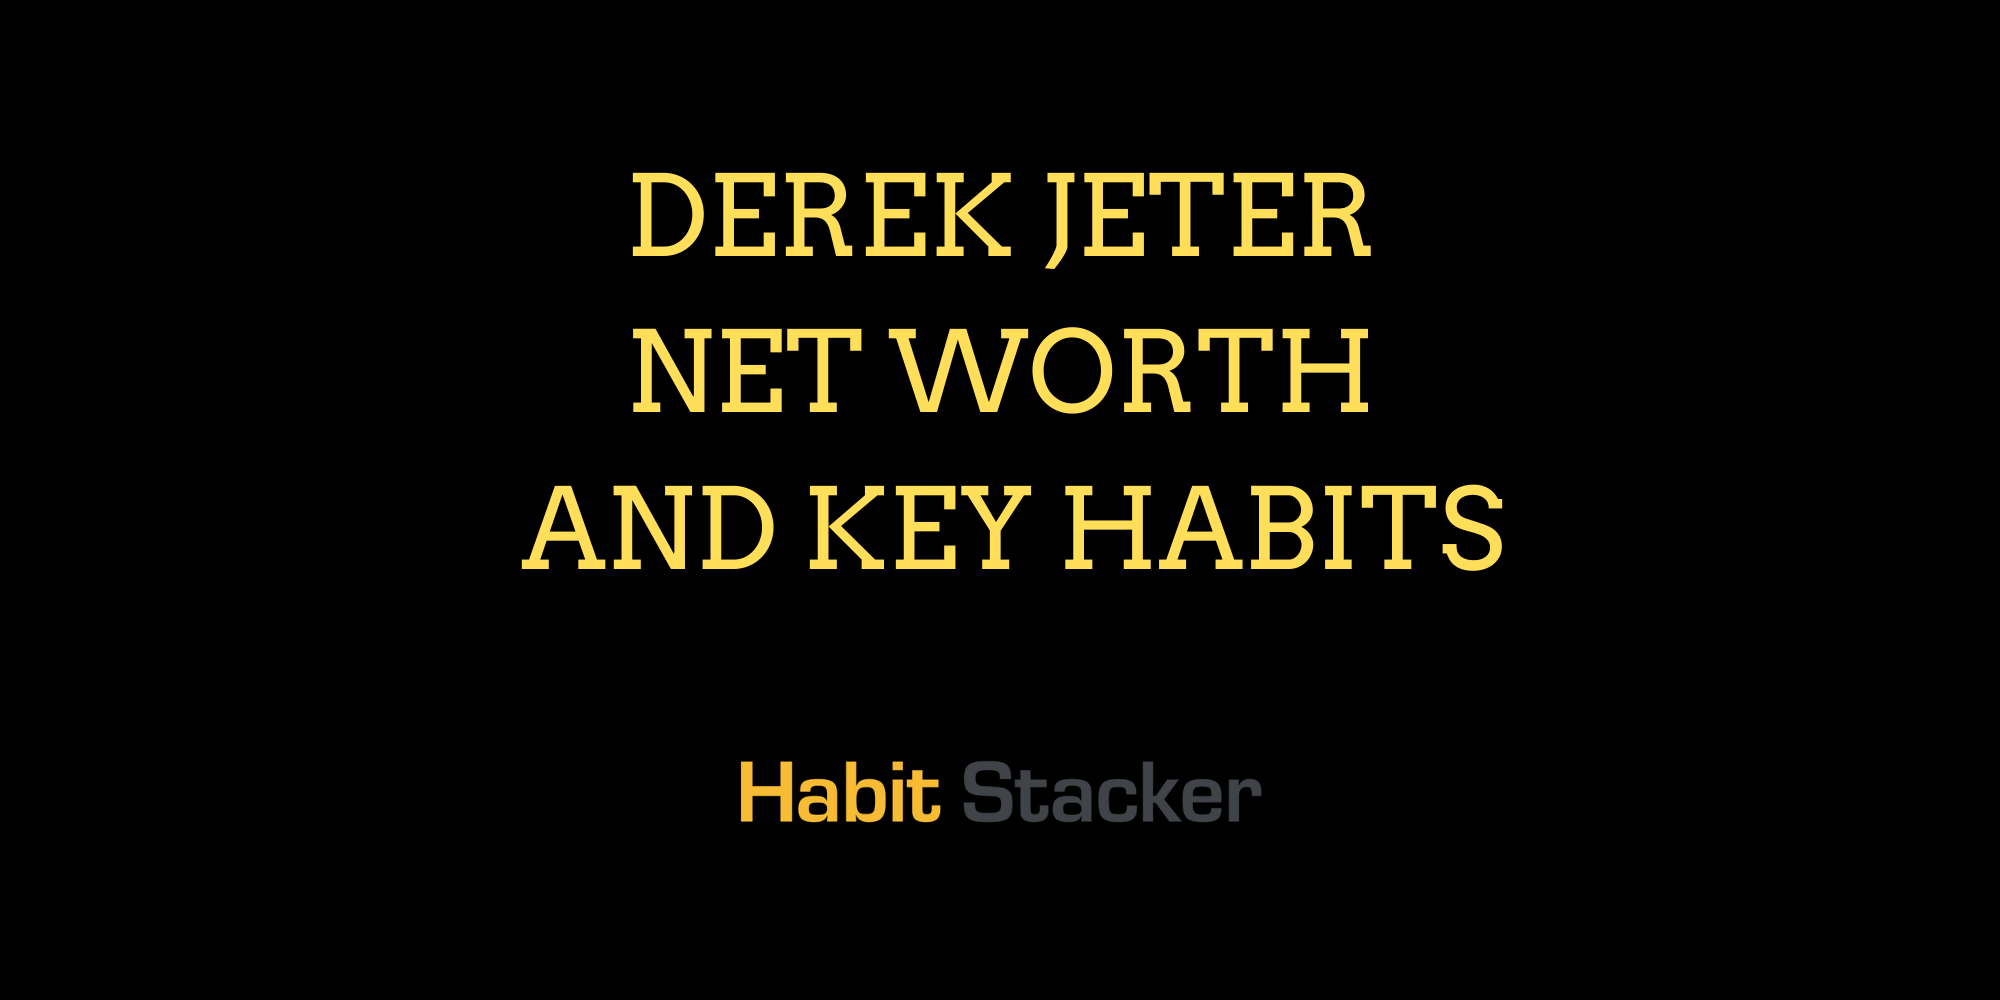 Derek Jeter Net Worth and Key Habits